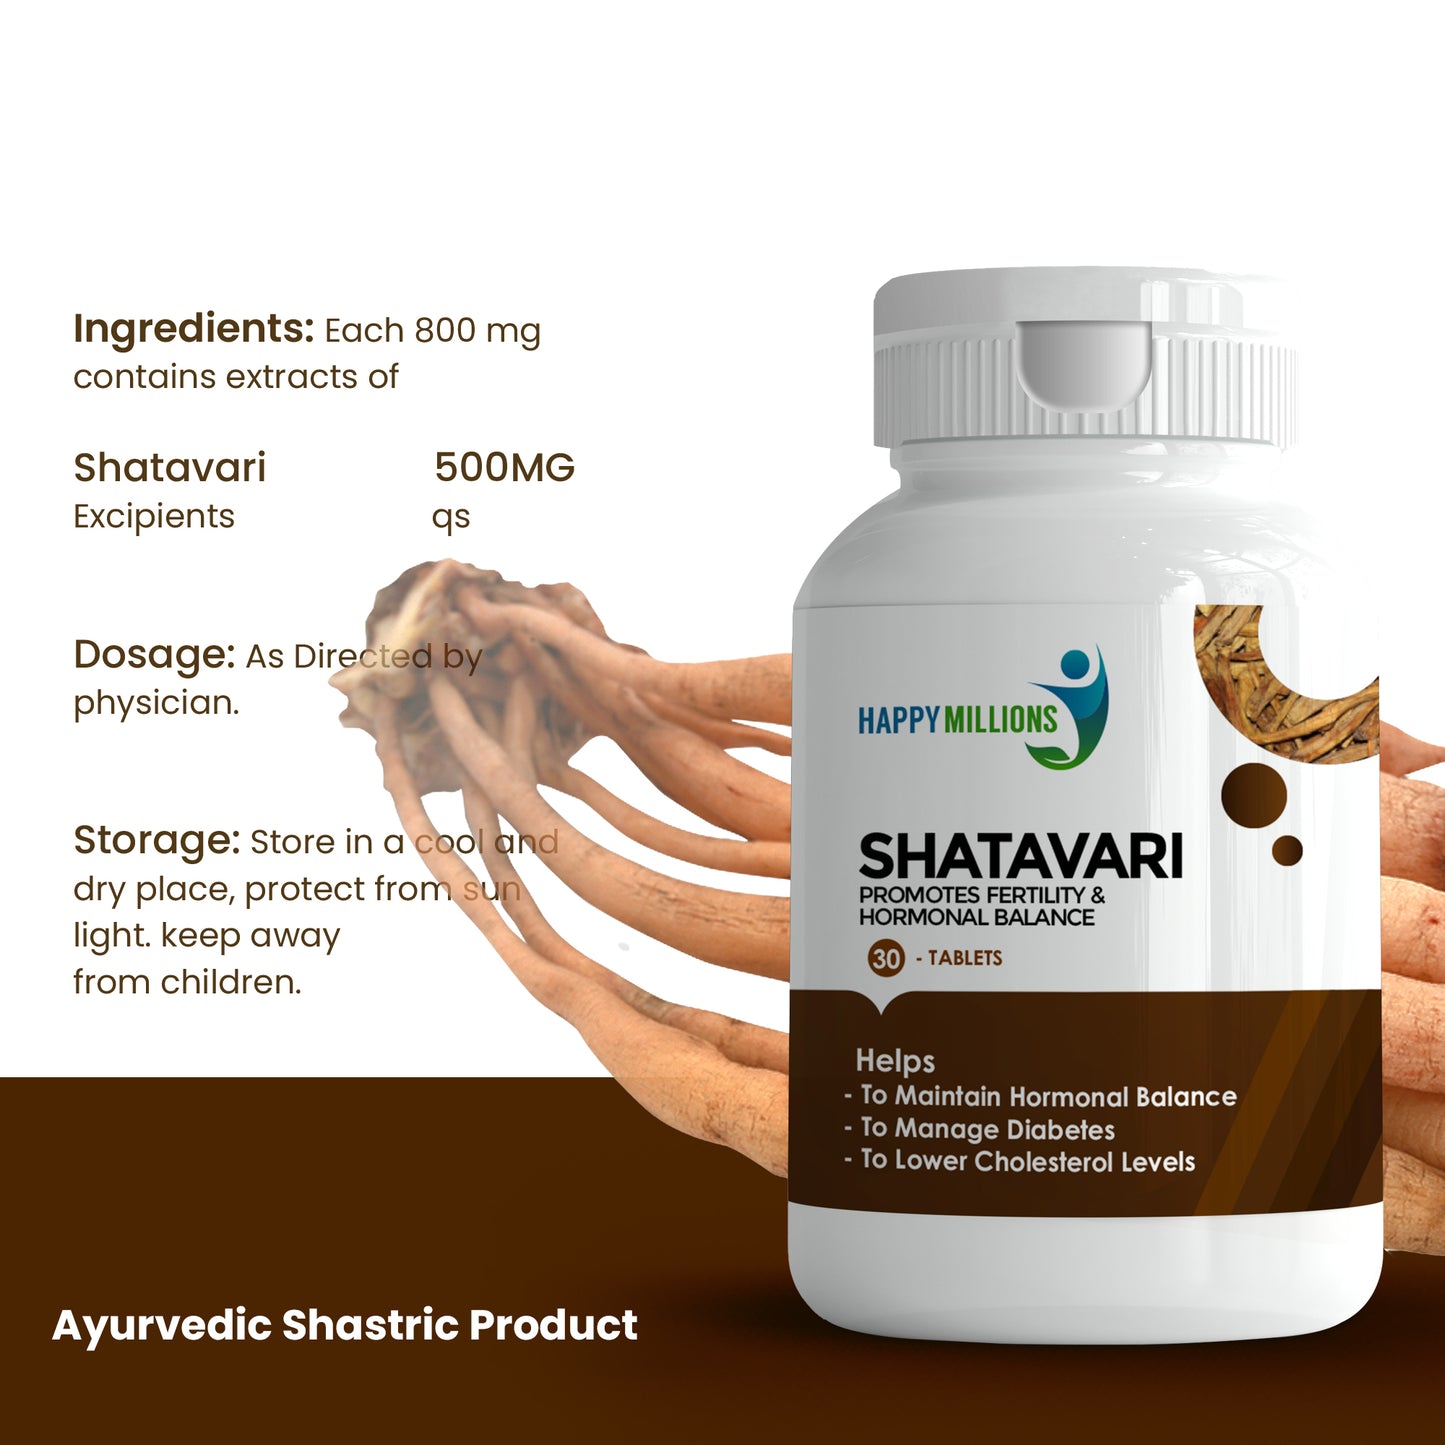 Explore Happy Millions Shatavari Ingredients  for Women's Health and Hormonal Balance Support.